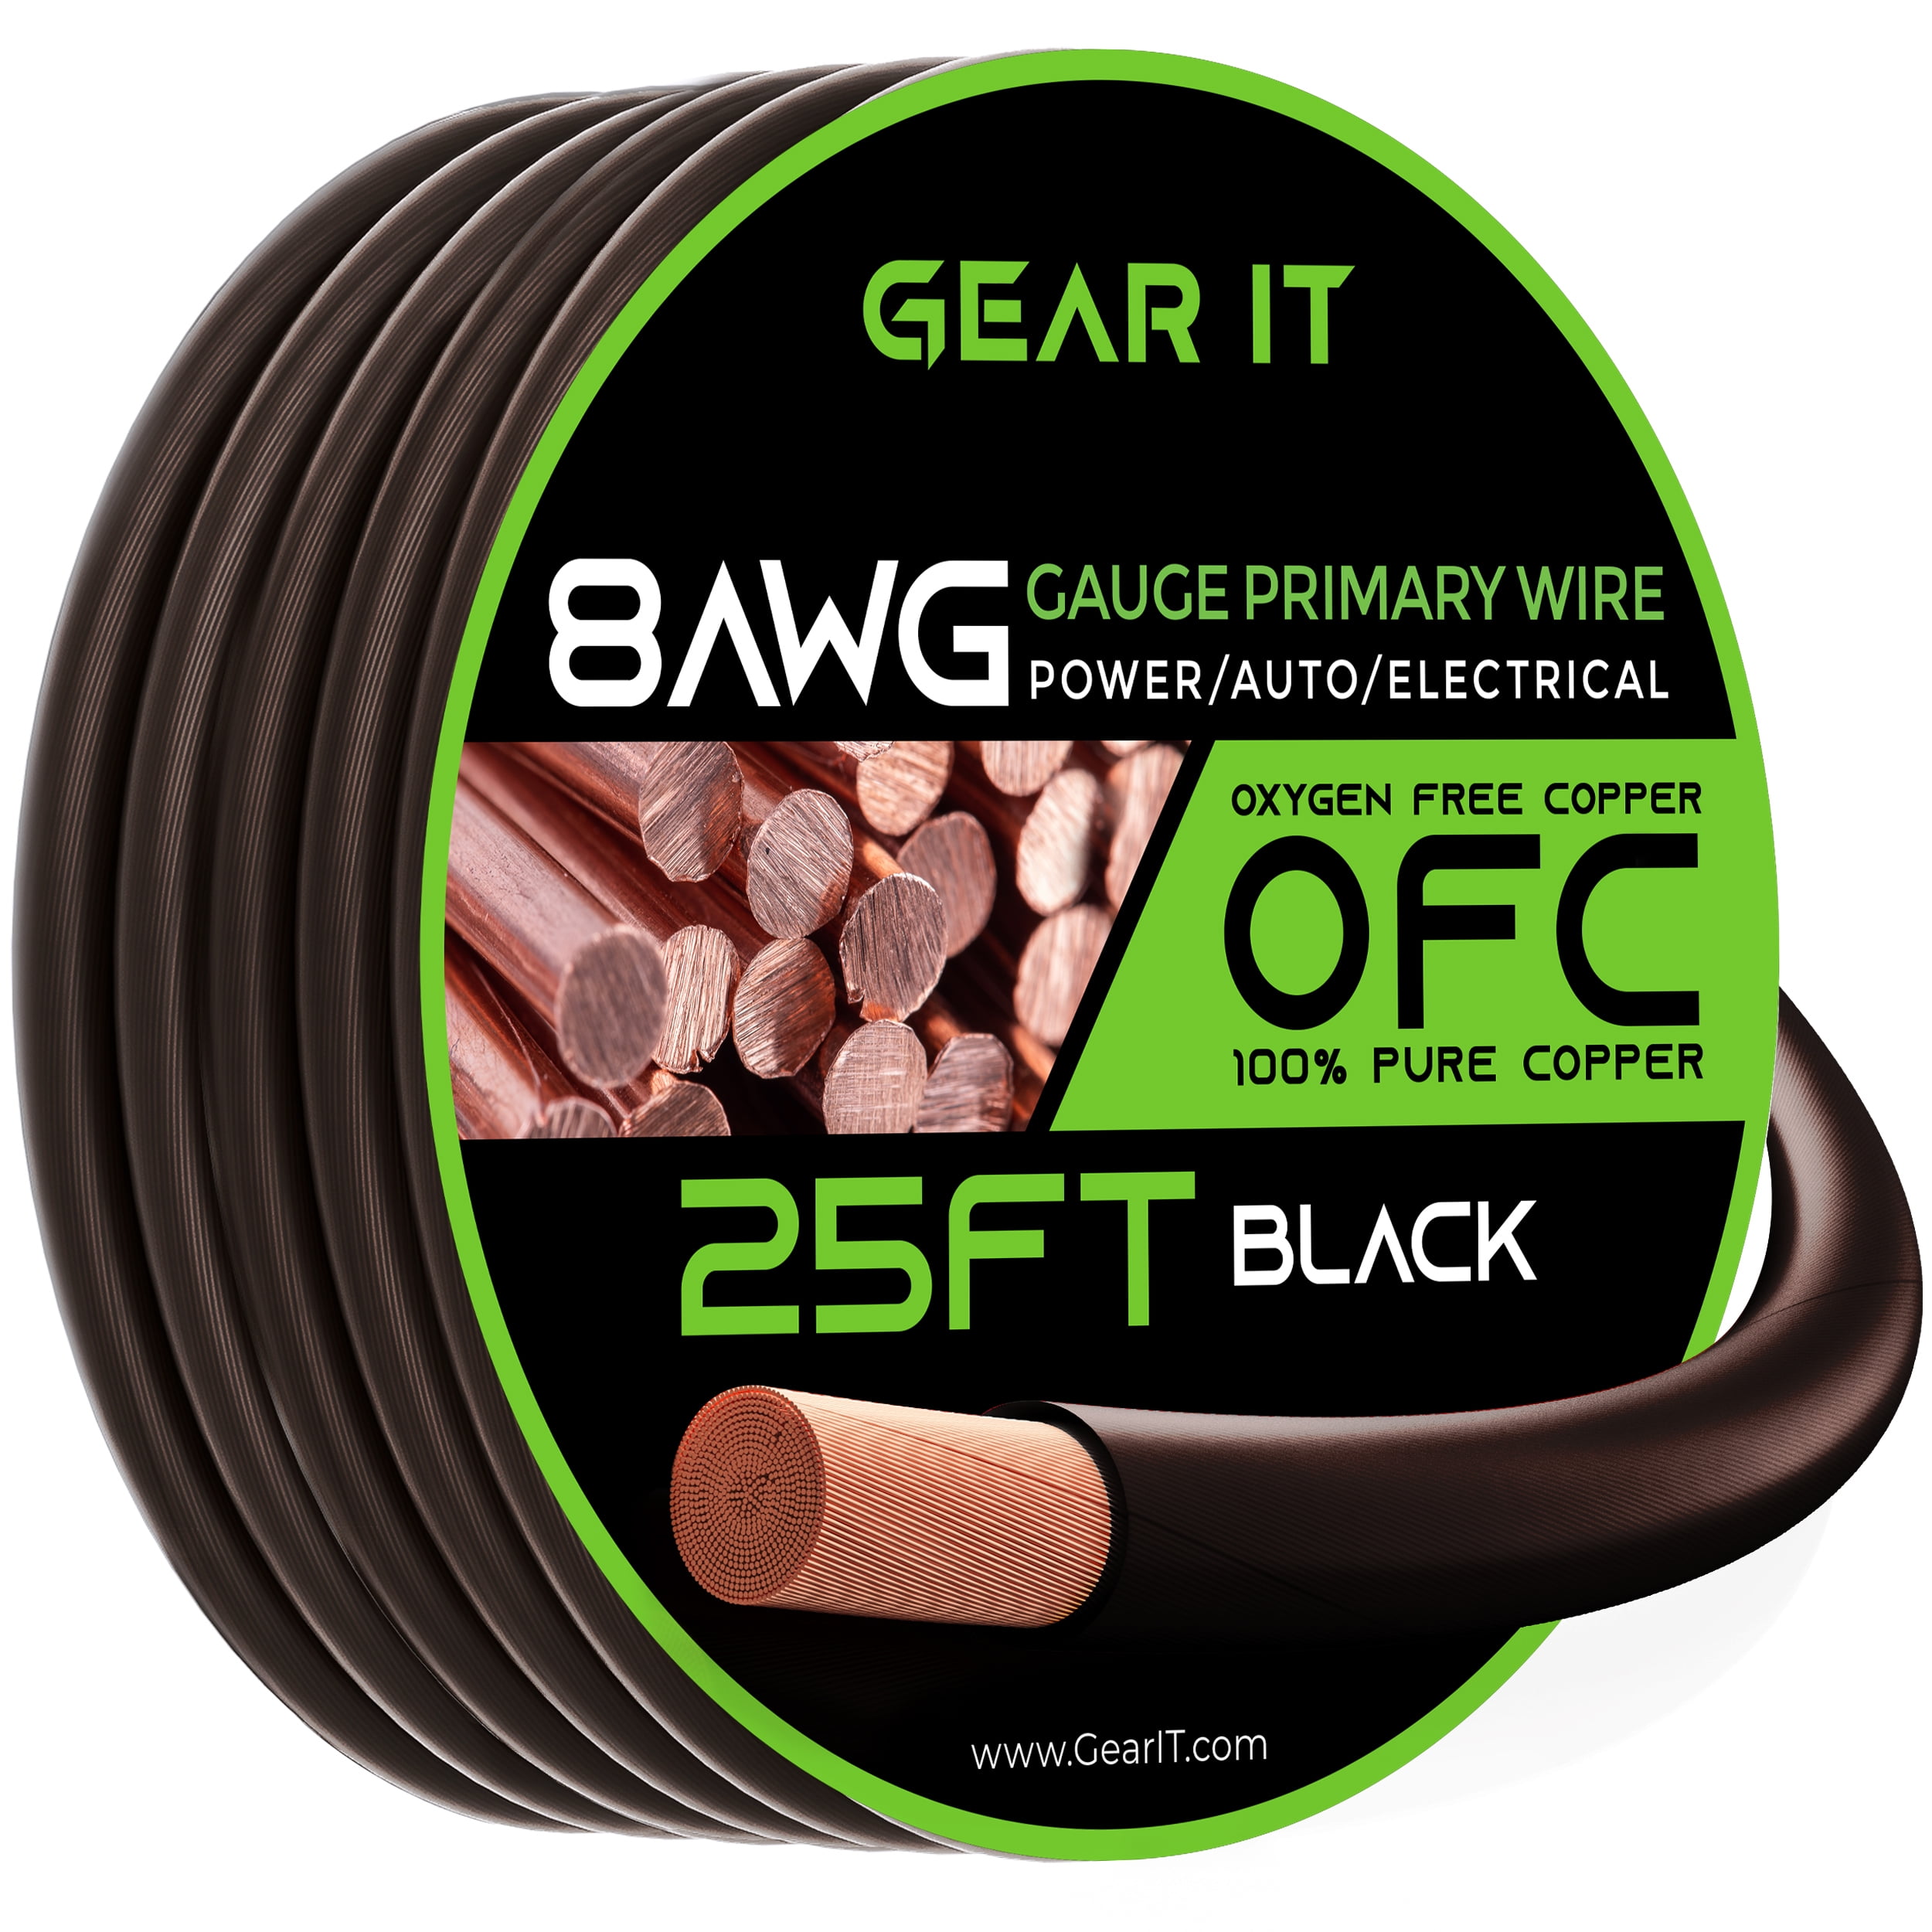 GS Power 14 Gauge AWG General Purpose Wiring, 100 Feet per Color, Red/Black